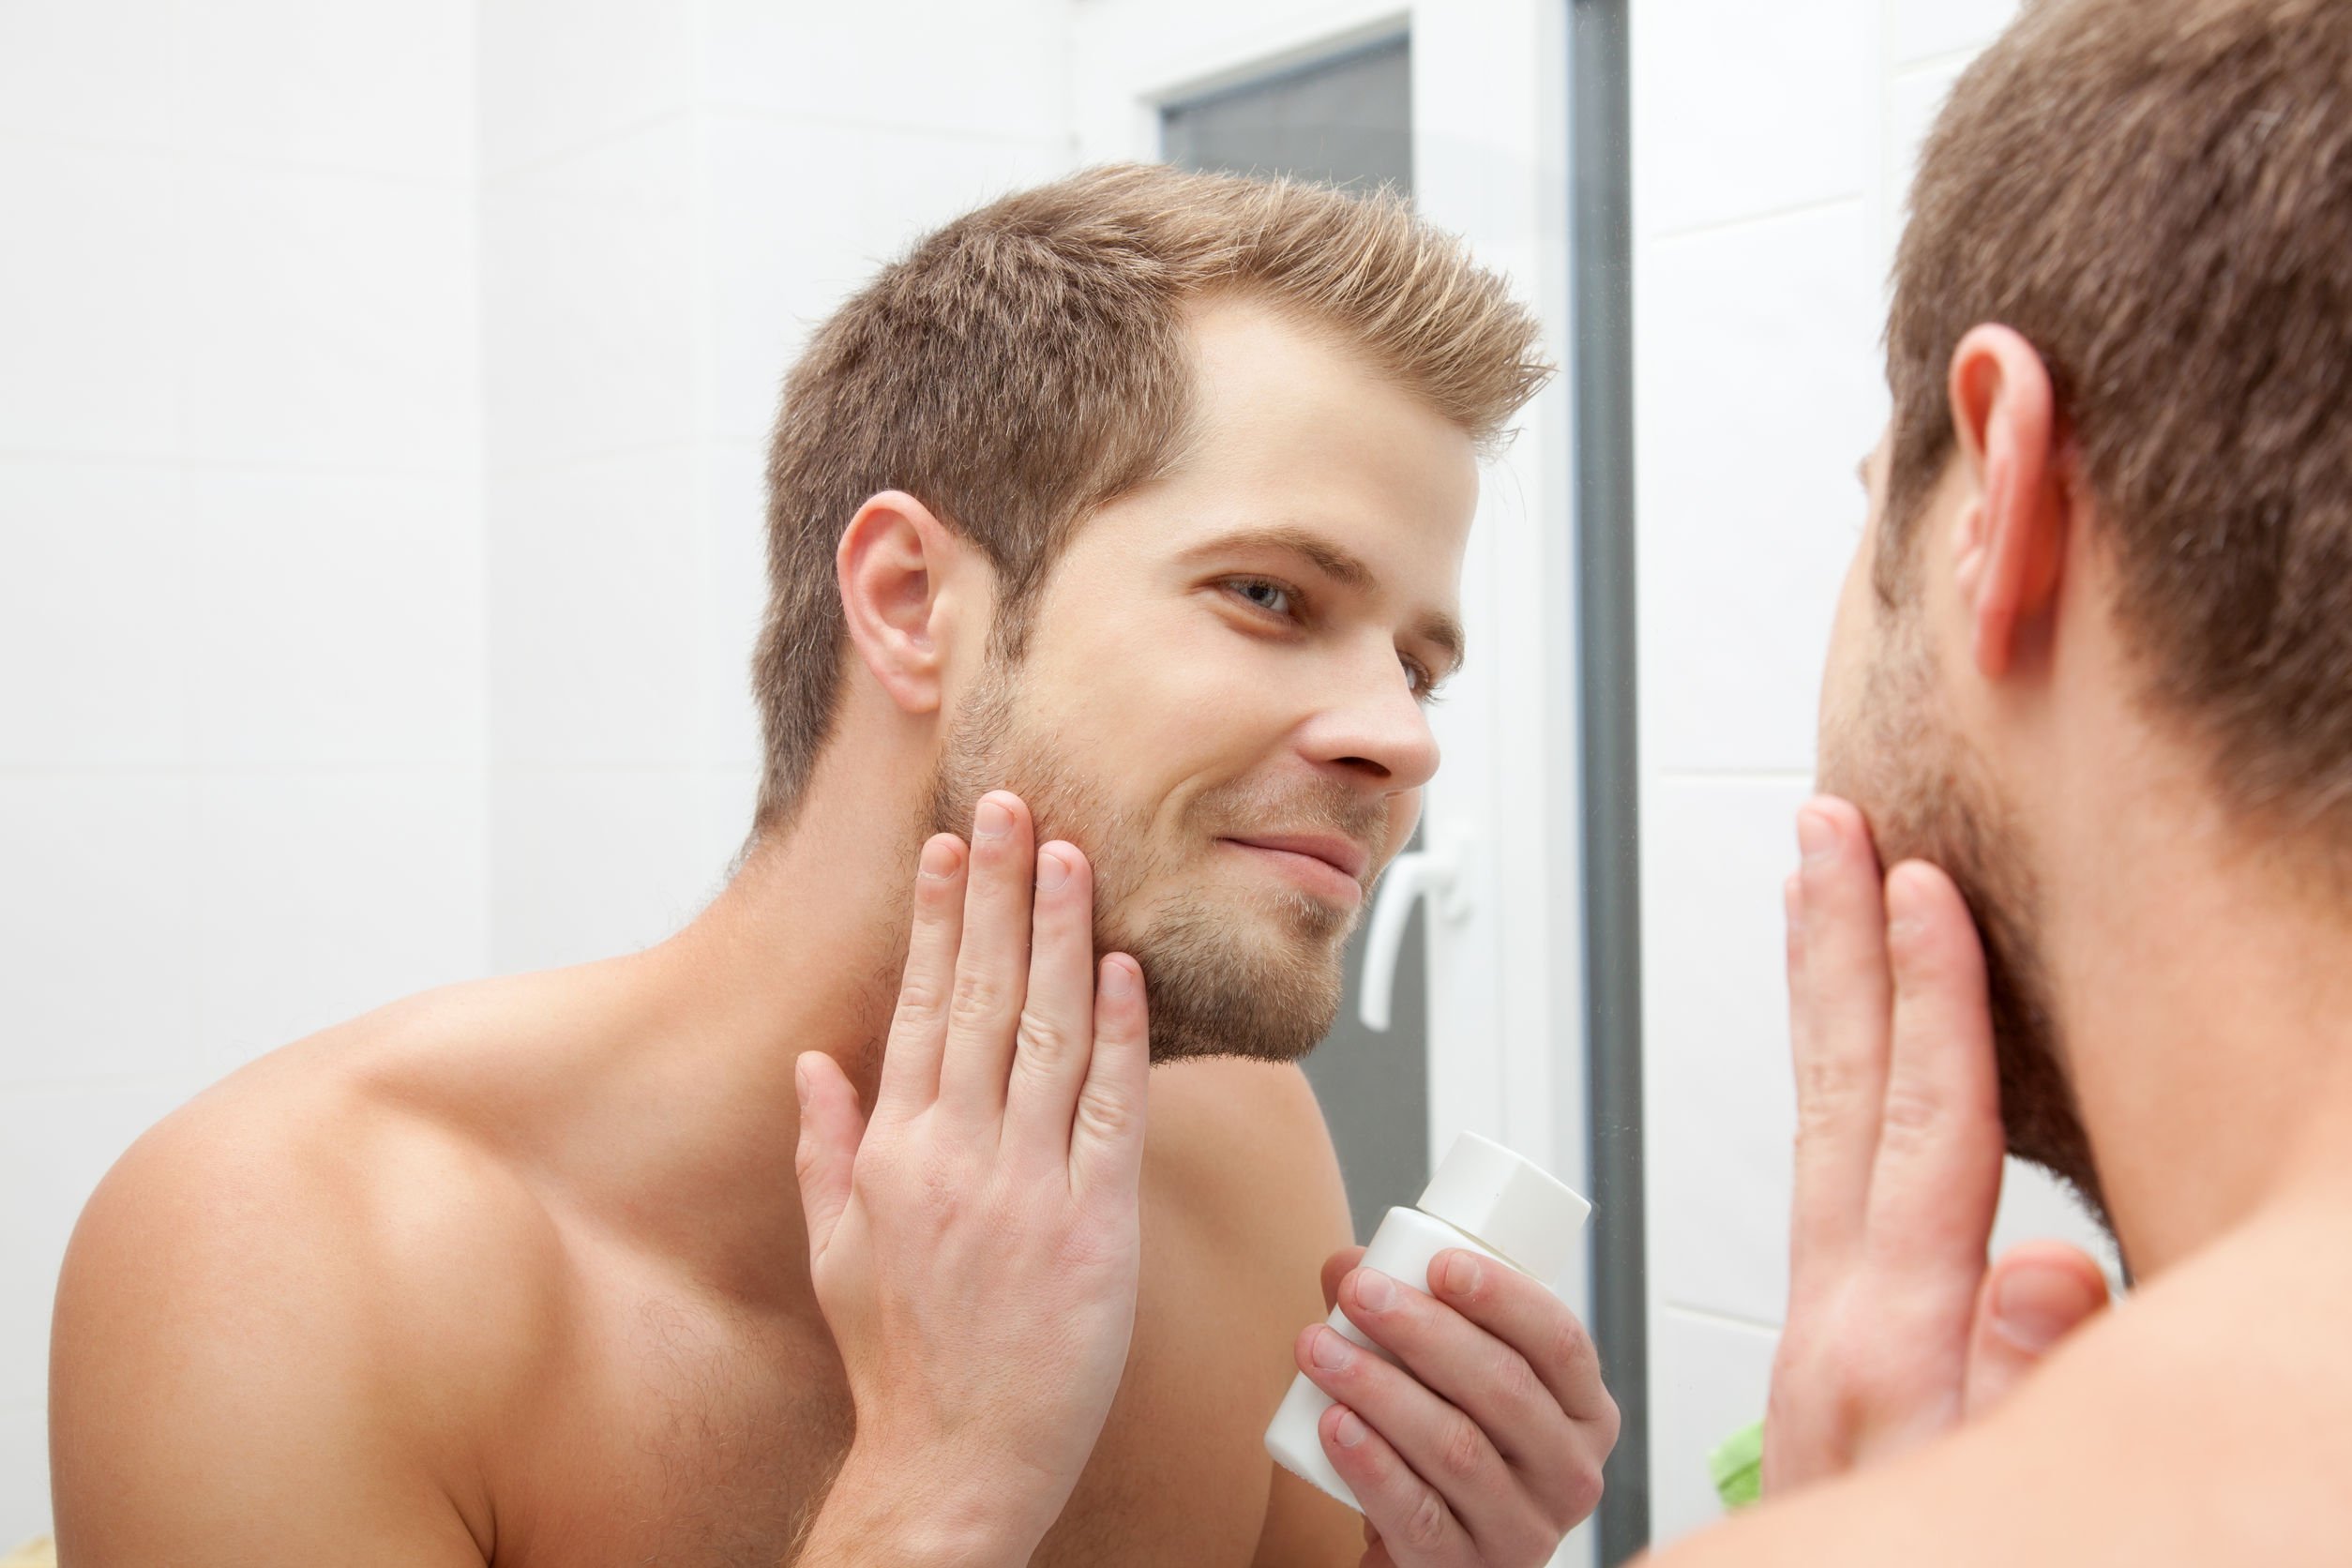 Бритье муж. Мужчина после бритья. Мужчина бреется. Мужское лицо. Бритья для мужчин.